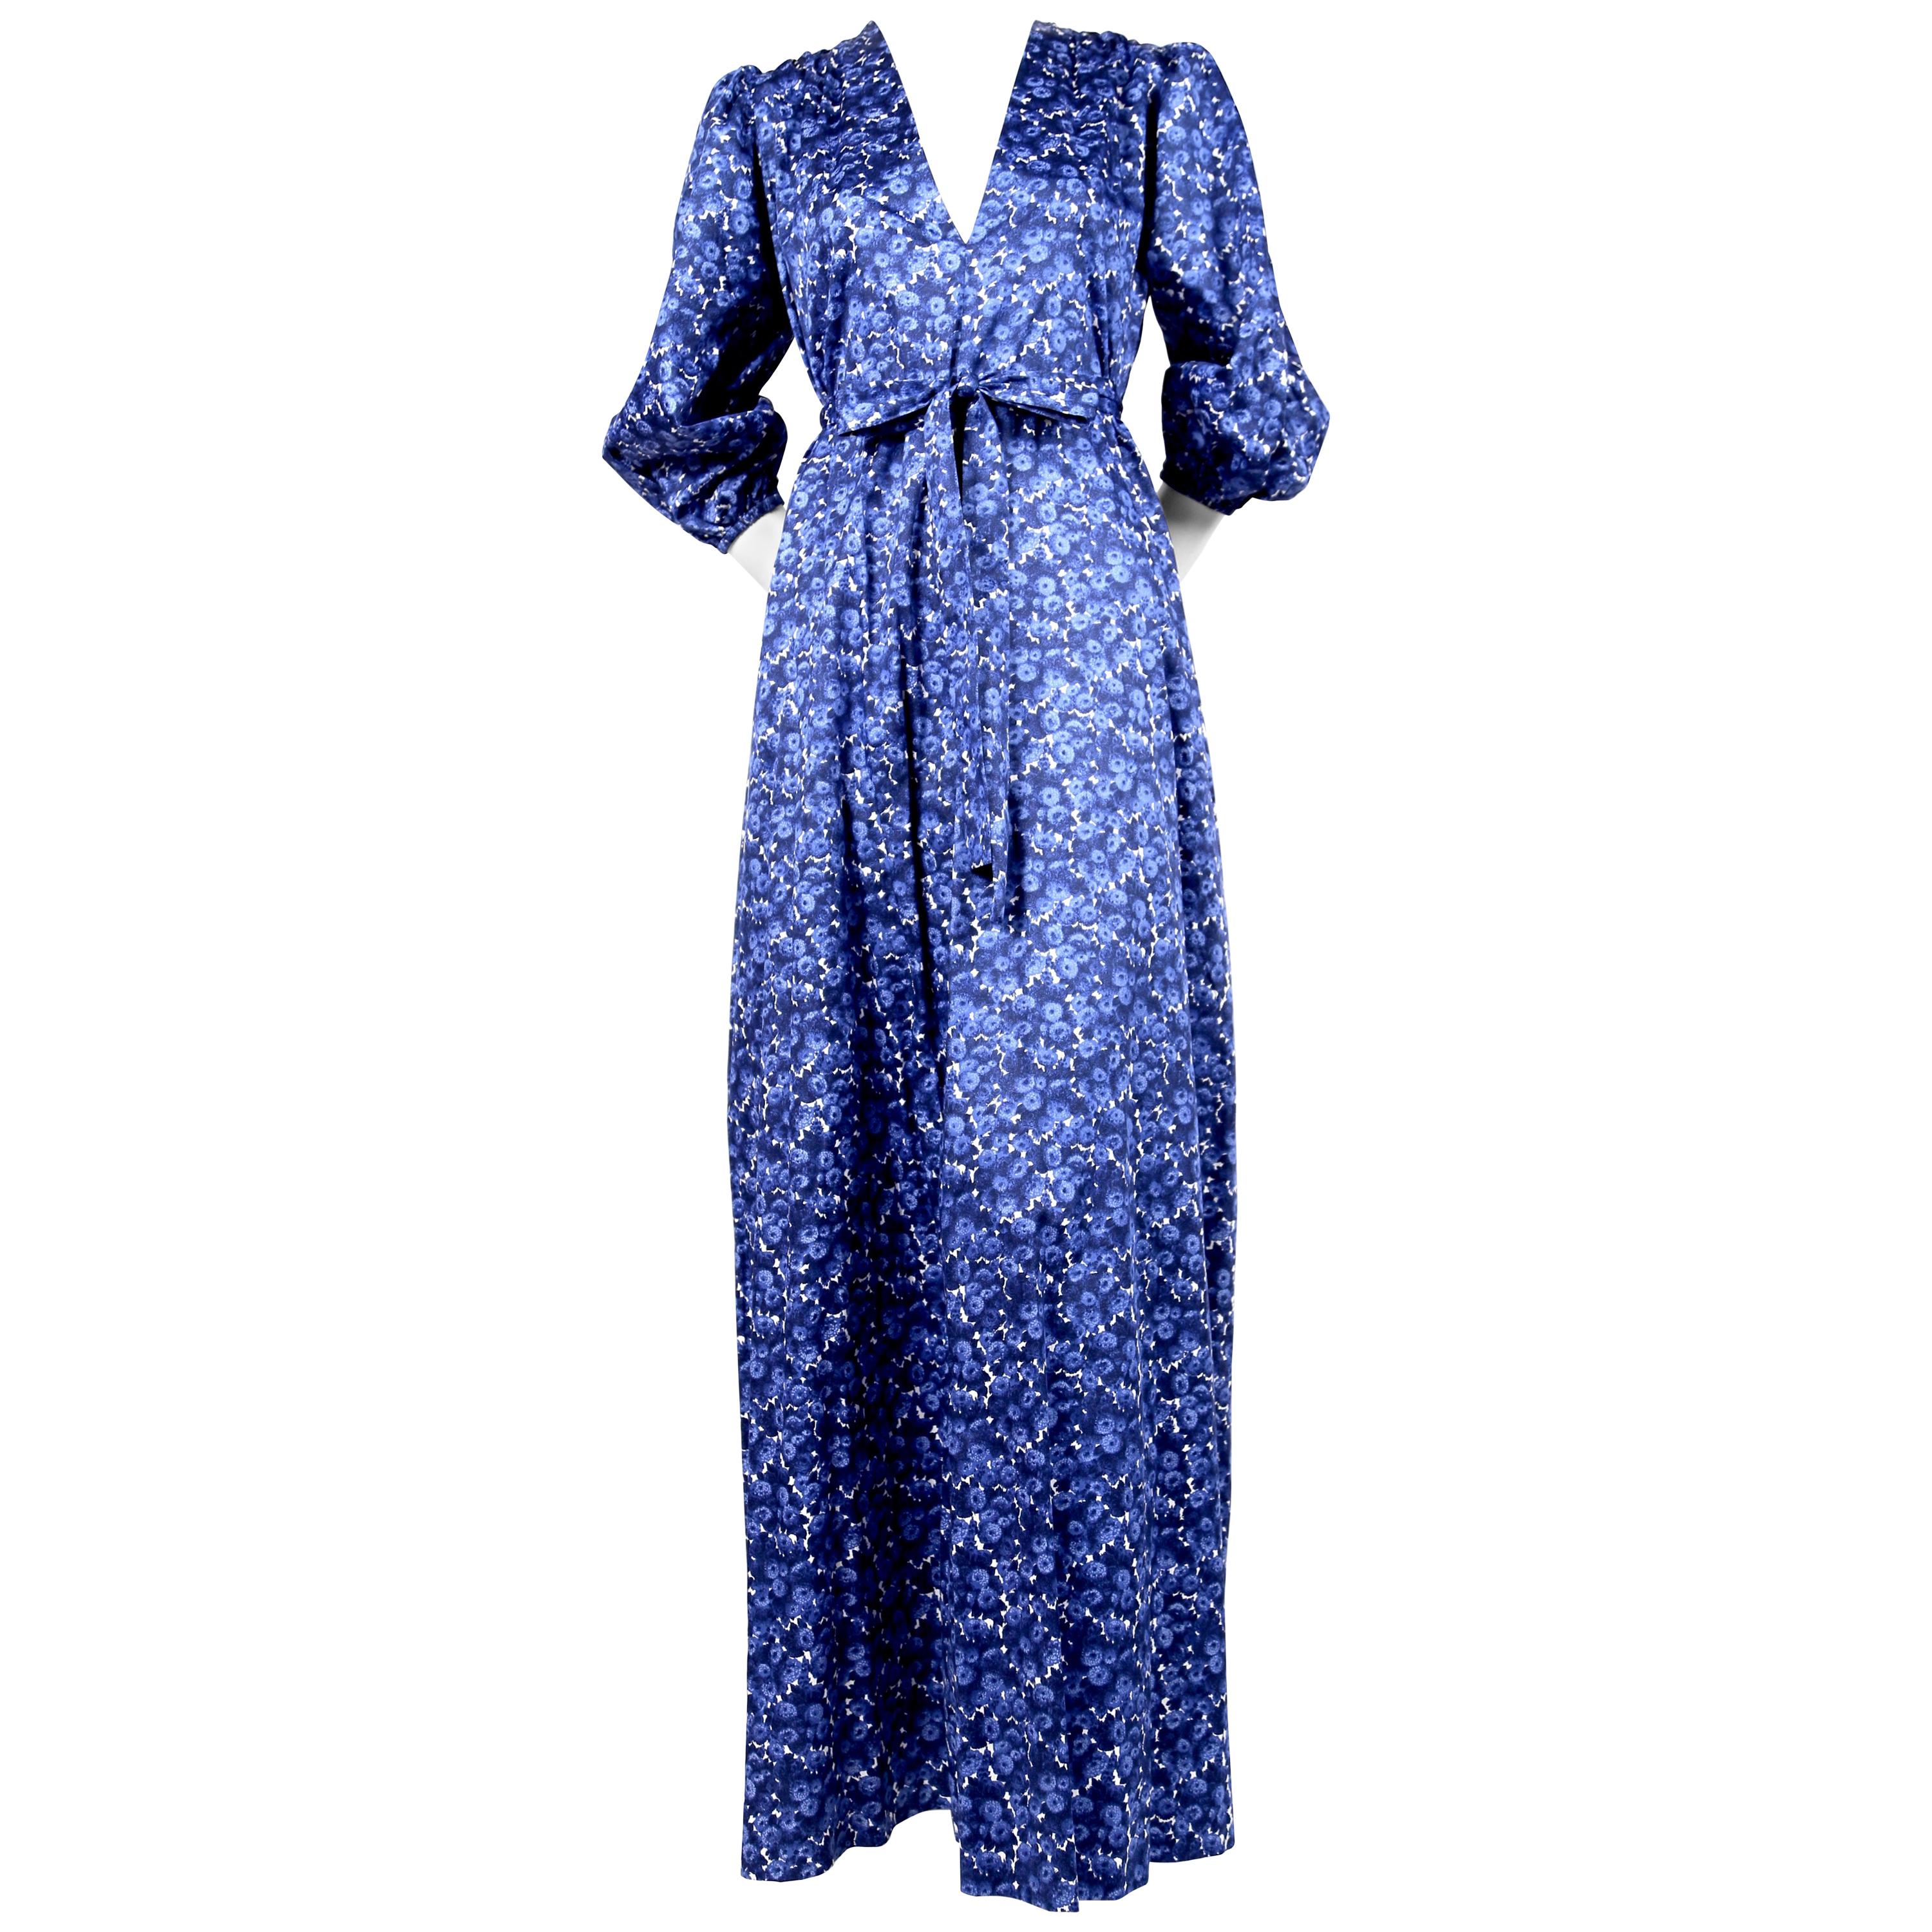 1970's YVES SAINT LAURENT blue floral printed maxi dress For Sale